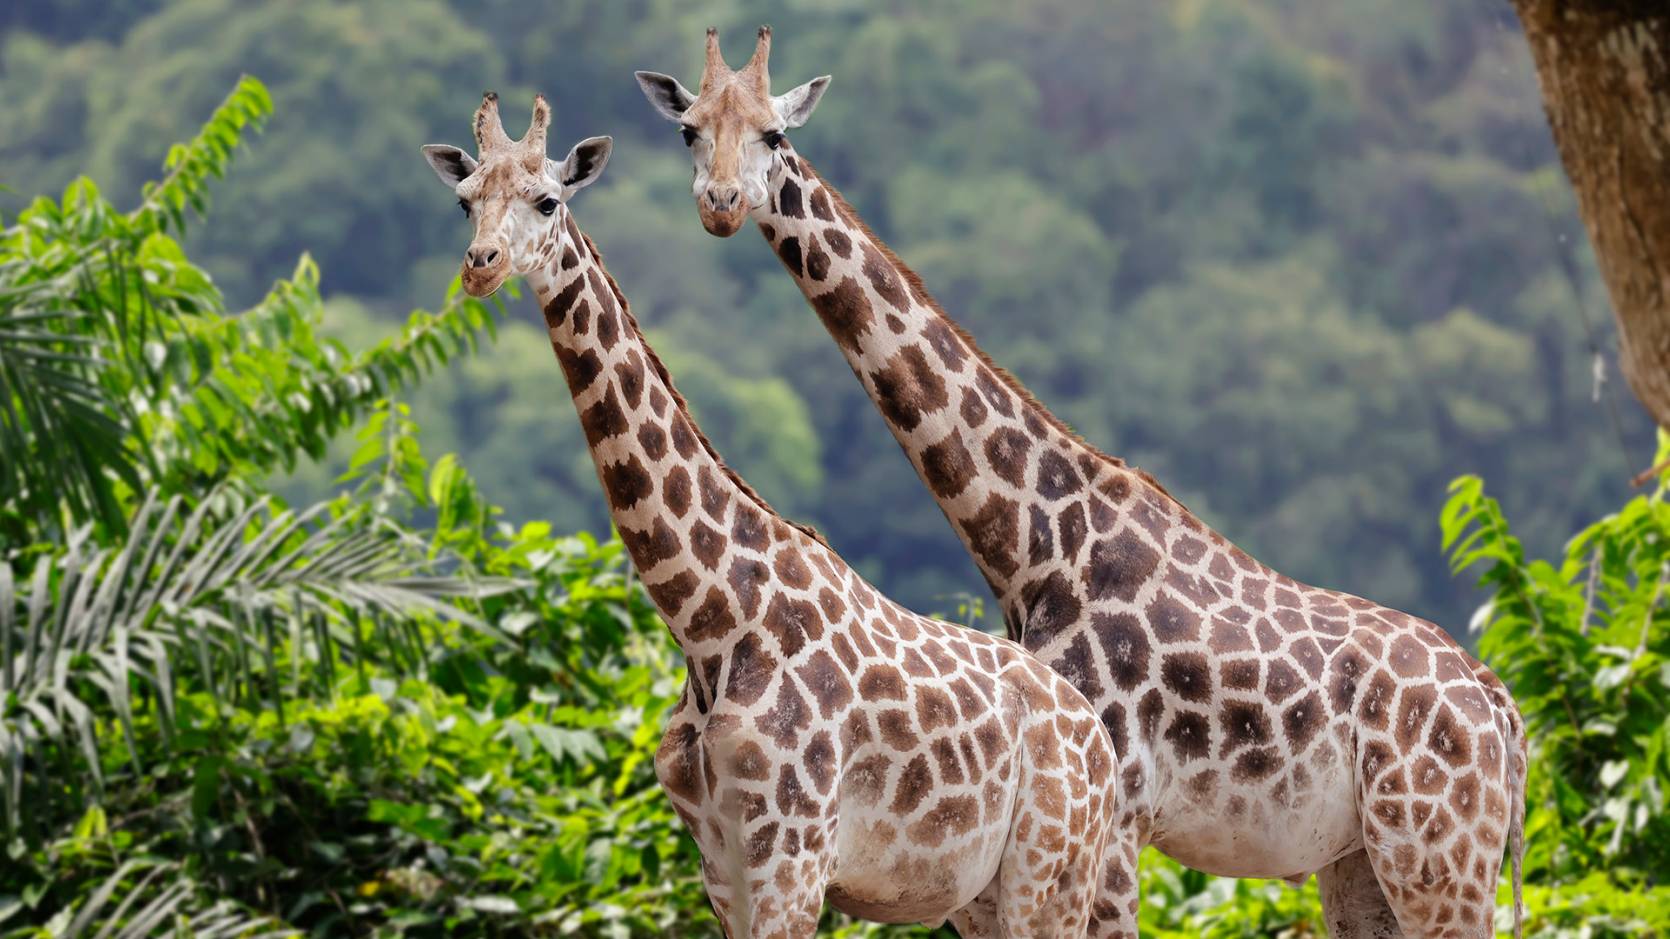 https://www.mandai.com/content/dam/mandai/singapore-zoo/animals-zones/giraffe/Masthead_E3A2931.jpg.transform/compress/resize1670/img.jpg